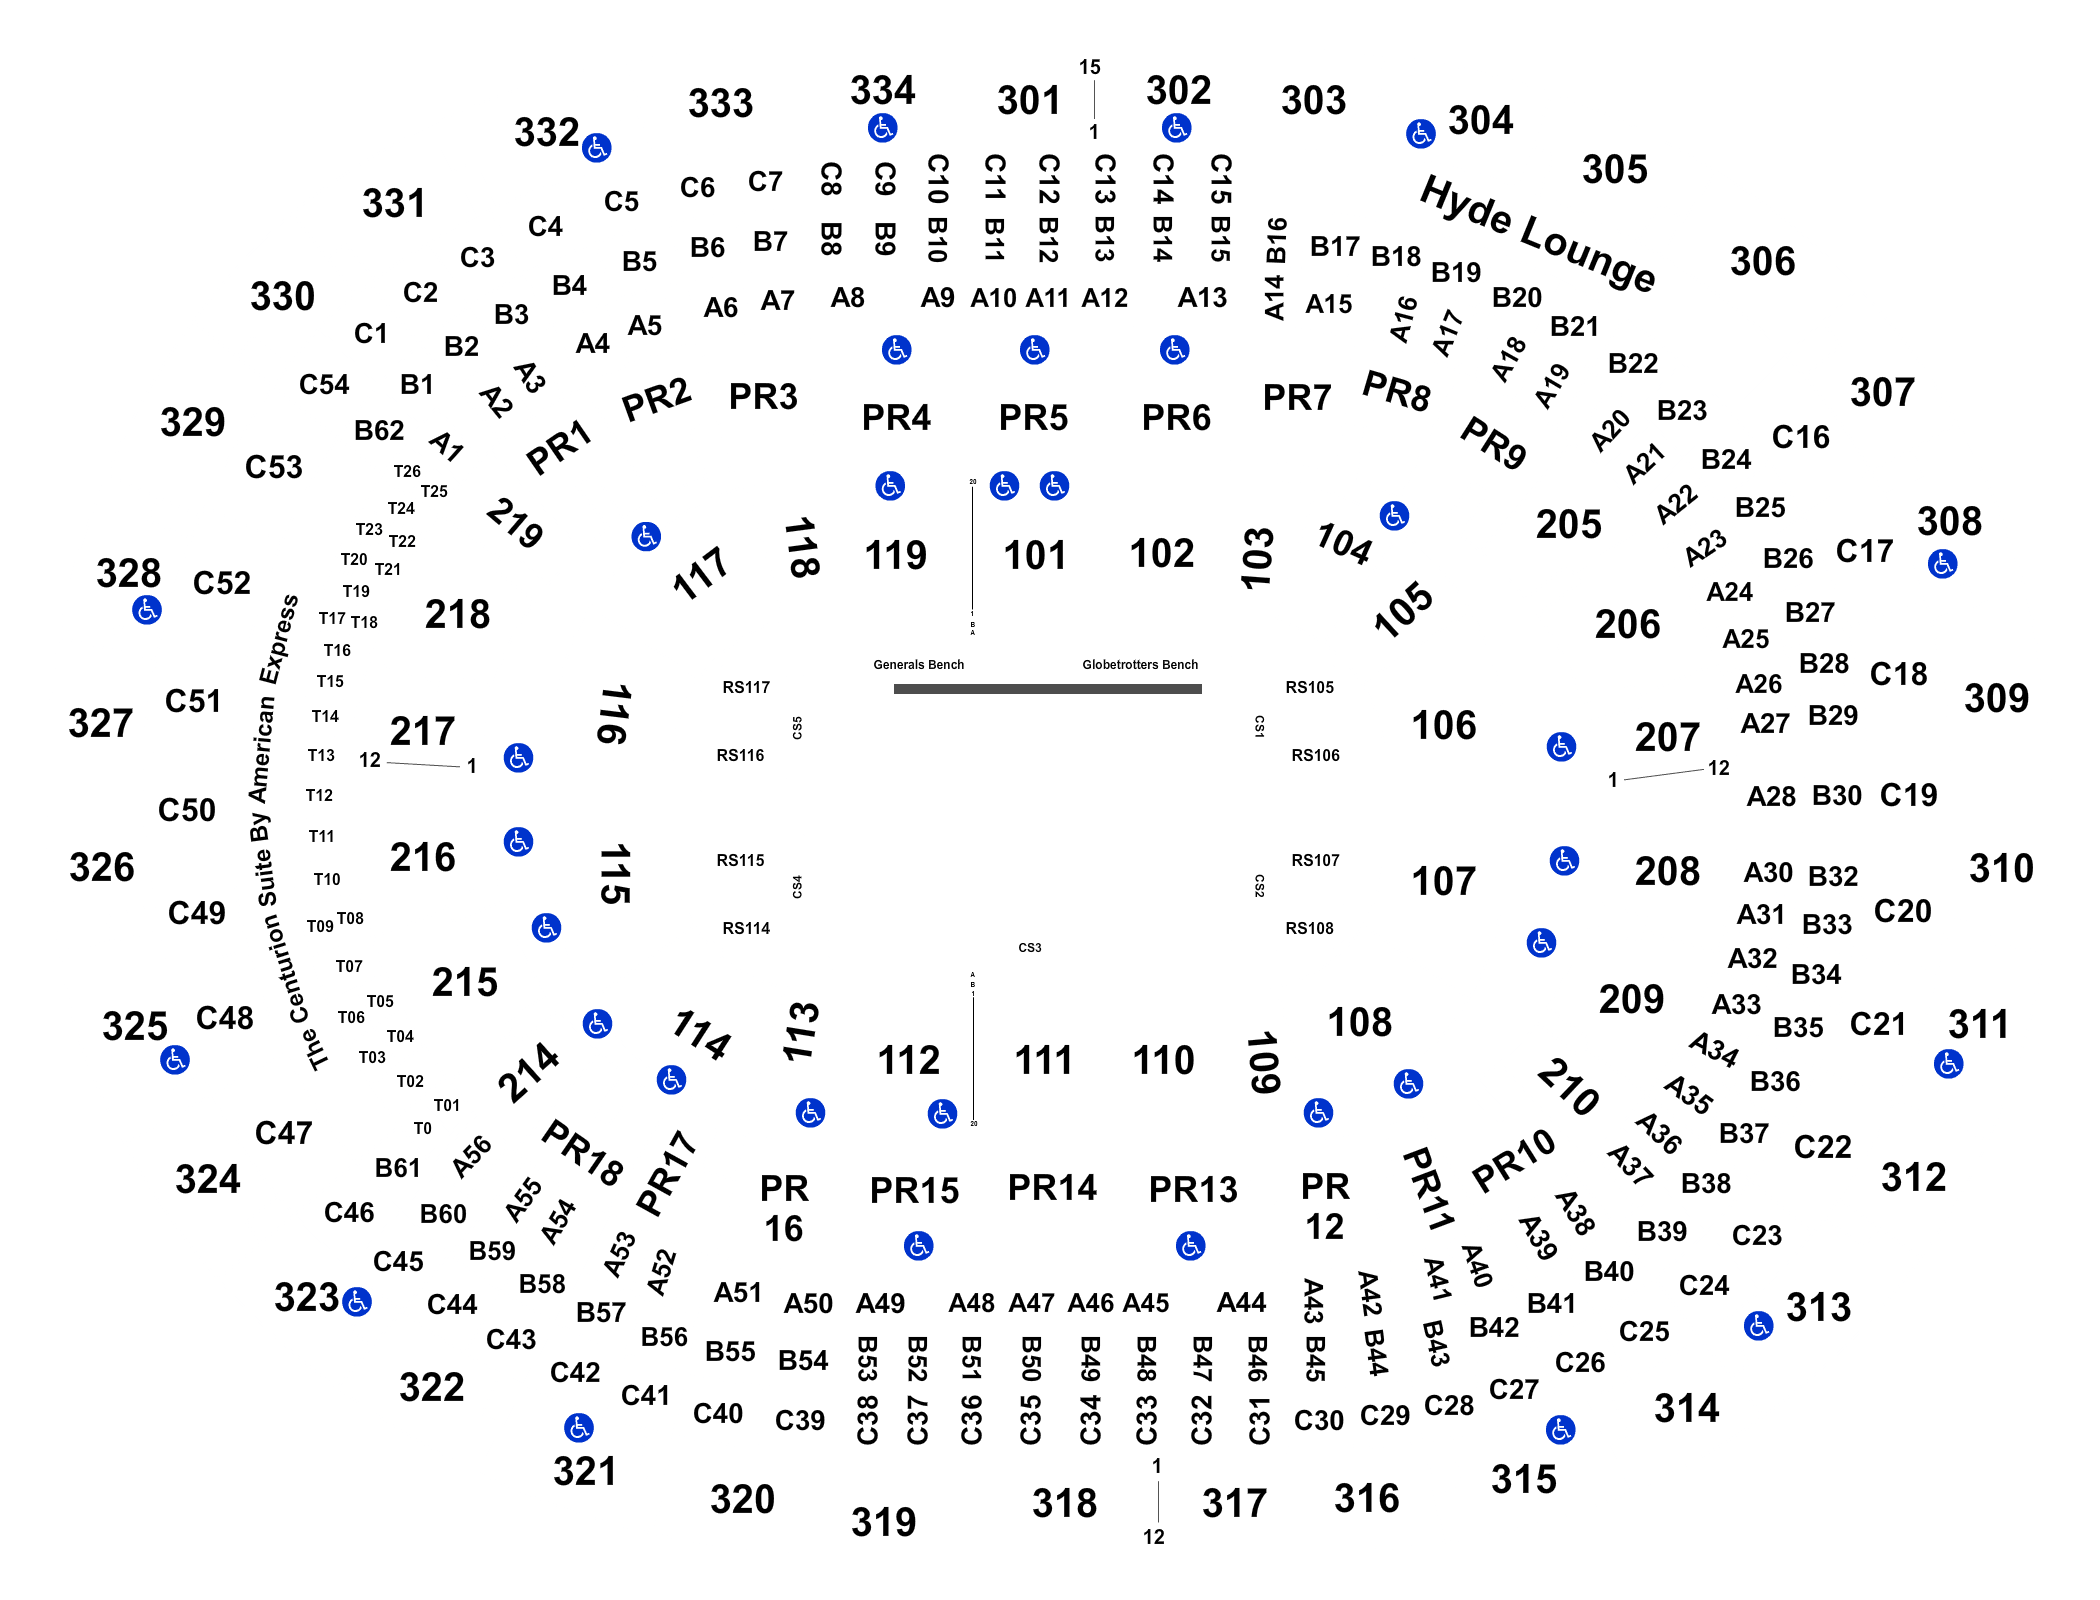 staples center seating chart concert